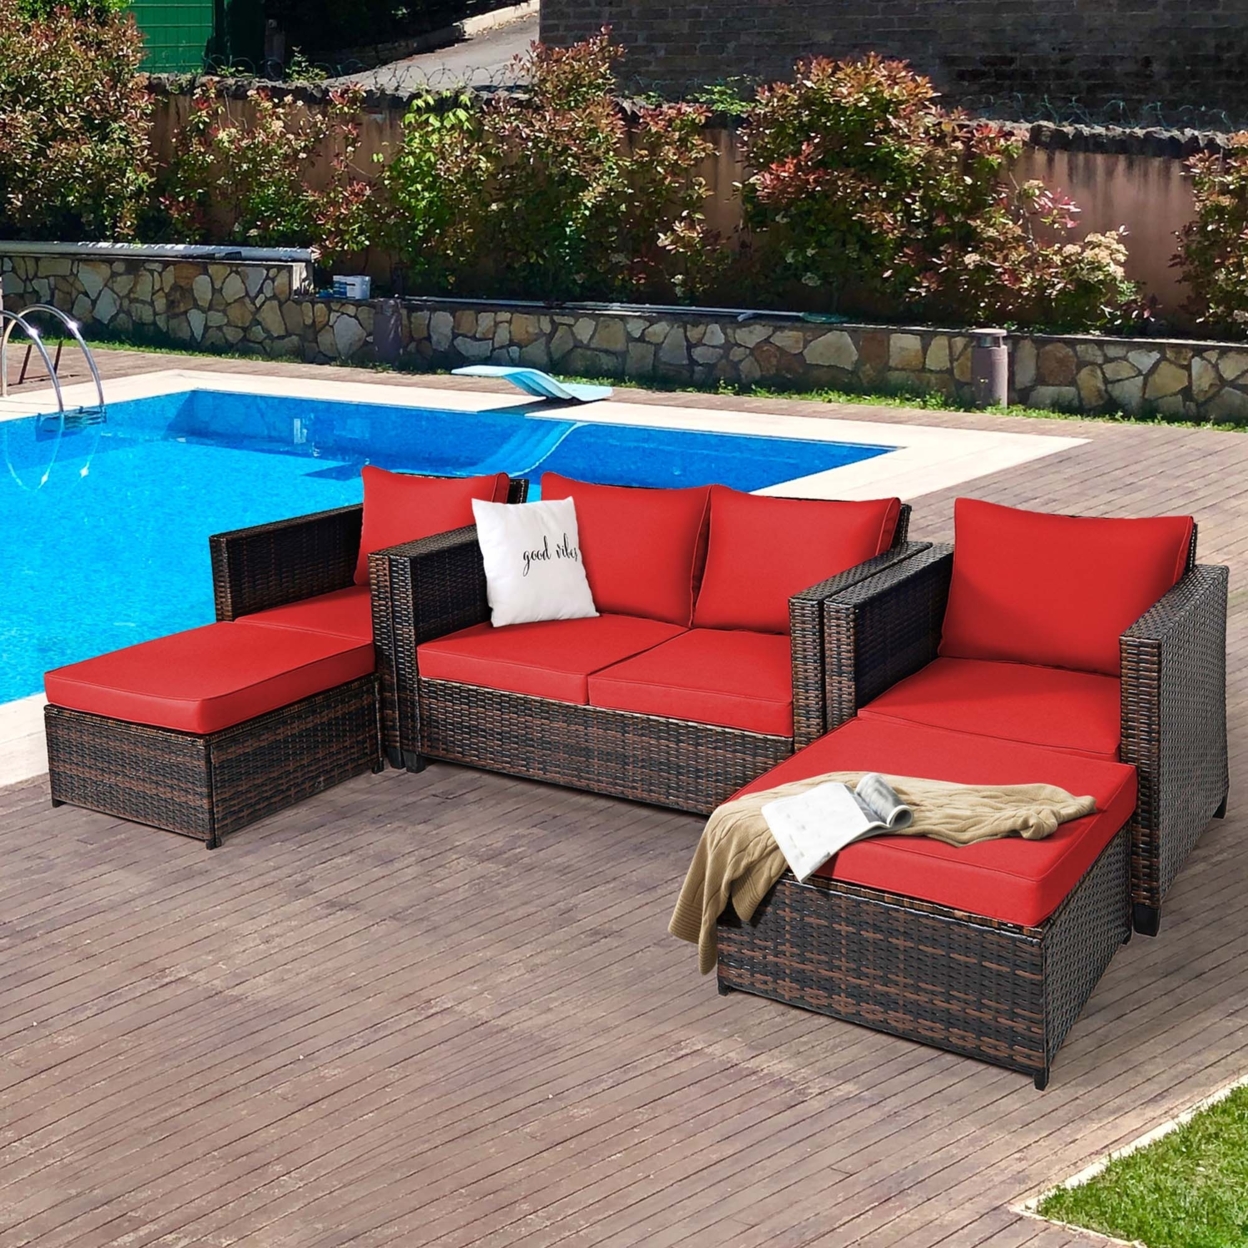 5PCS Outdoor Patio Rattan Conversation Sofa Furniture Set W/ Red Cushions